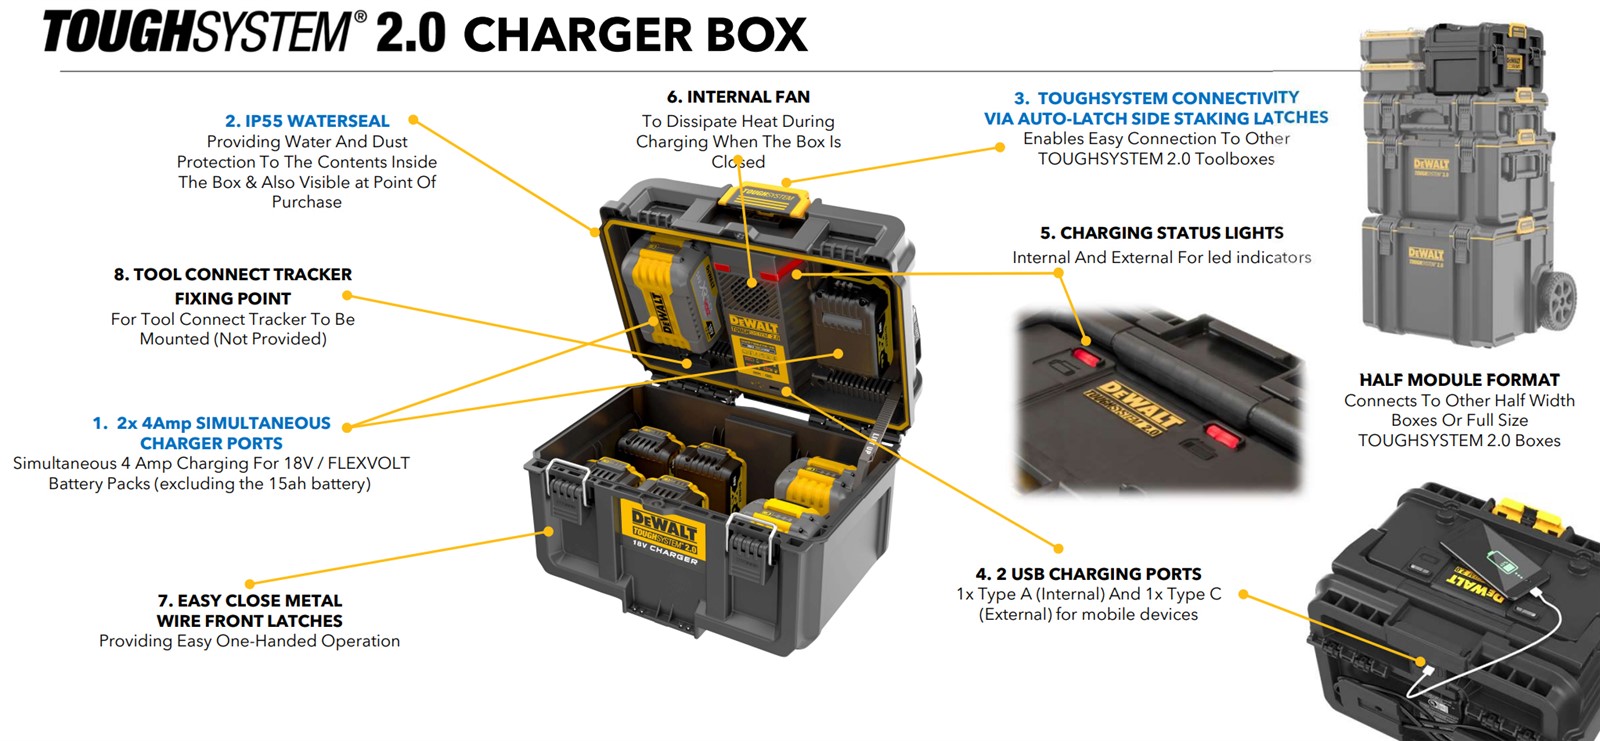 USB 2.0 DeWalt | 54v Charger Box / 18 XR DWST83470-GB Charge Battery eBay Toughsystem